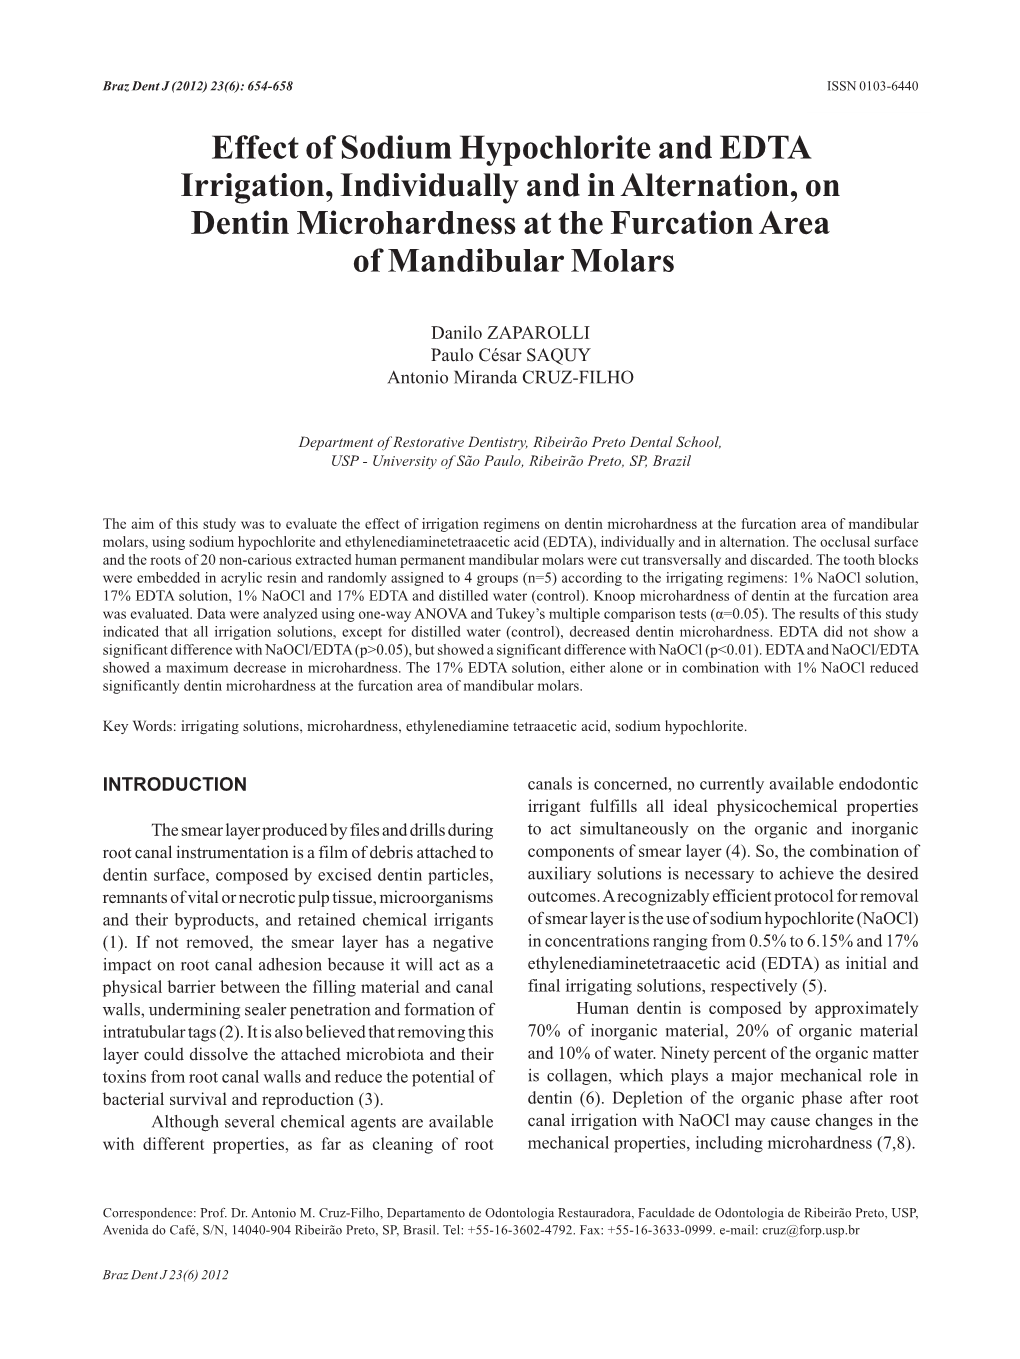 Effect of Sodium Hypochlorite and EDTA Irrigation, Individually and in Alternation, on Dentin Microhardness at the Furcation Area of Mandibular Molars